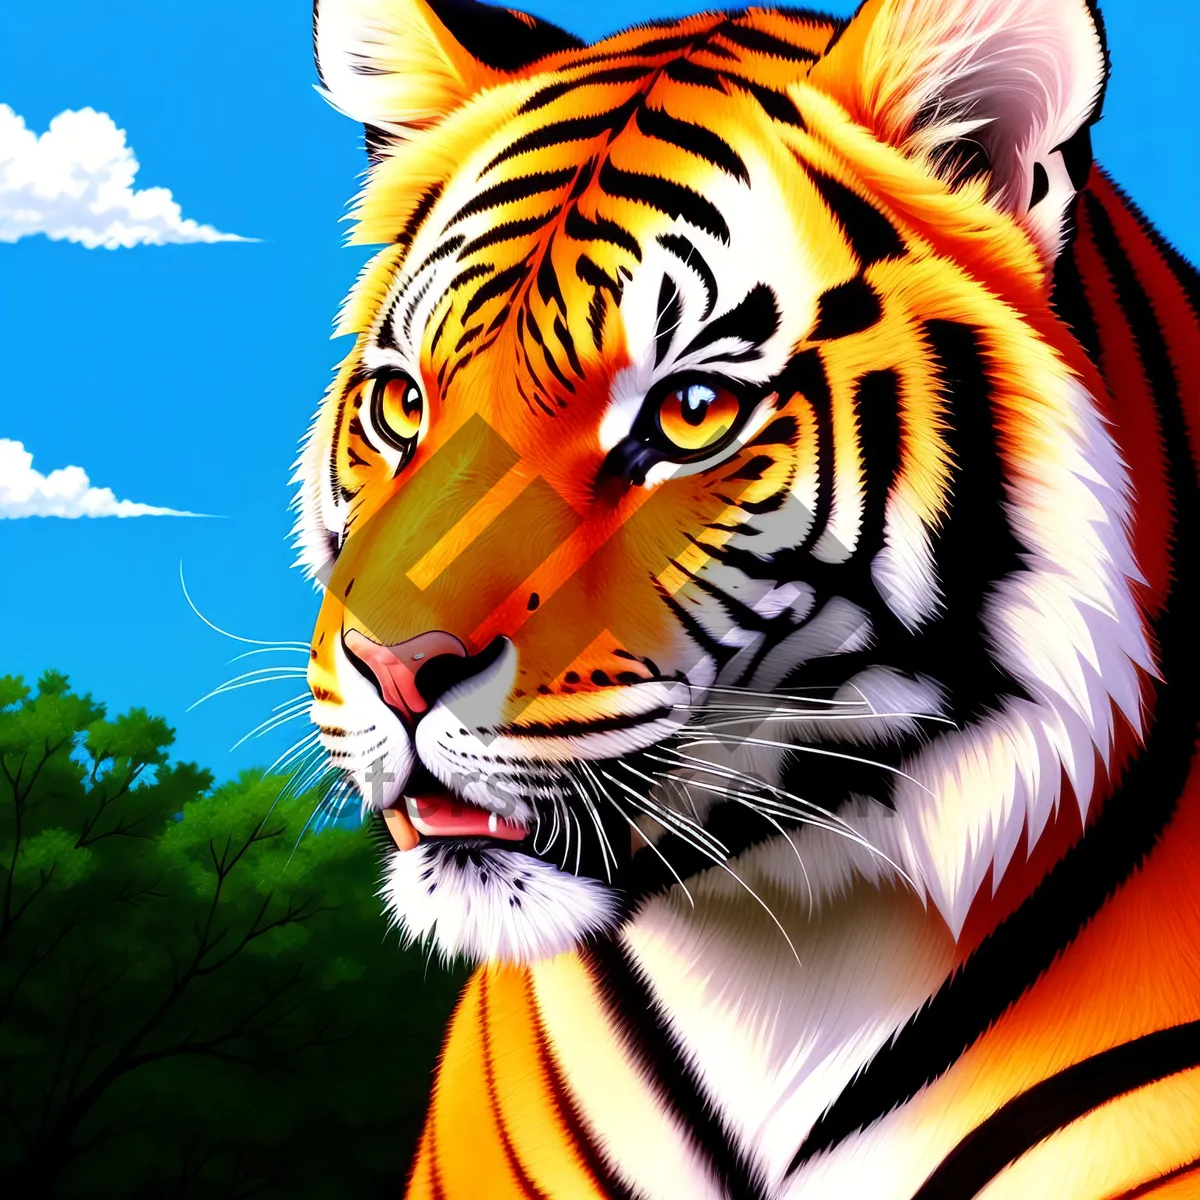 Picture of Striped Predator: Majestic Tiger Cat in the Wild